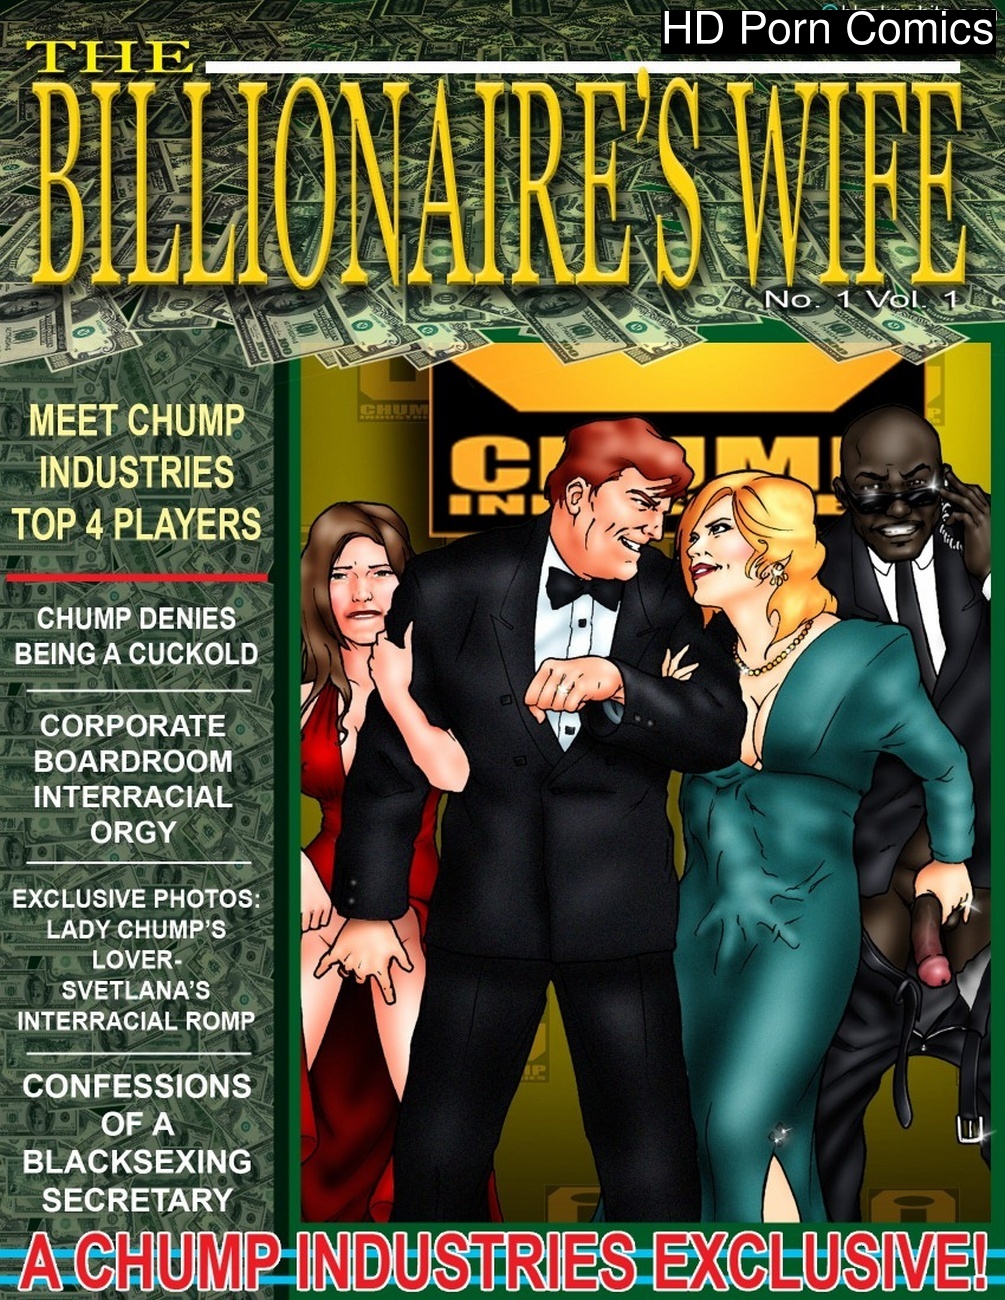 The Billionares Wife 1 Sex Comic HD Porn Comics photo photo